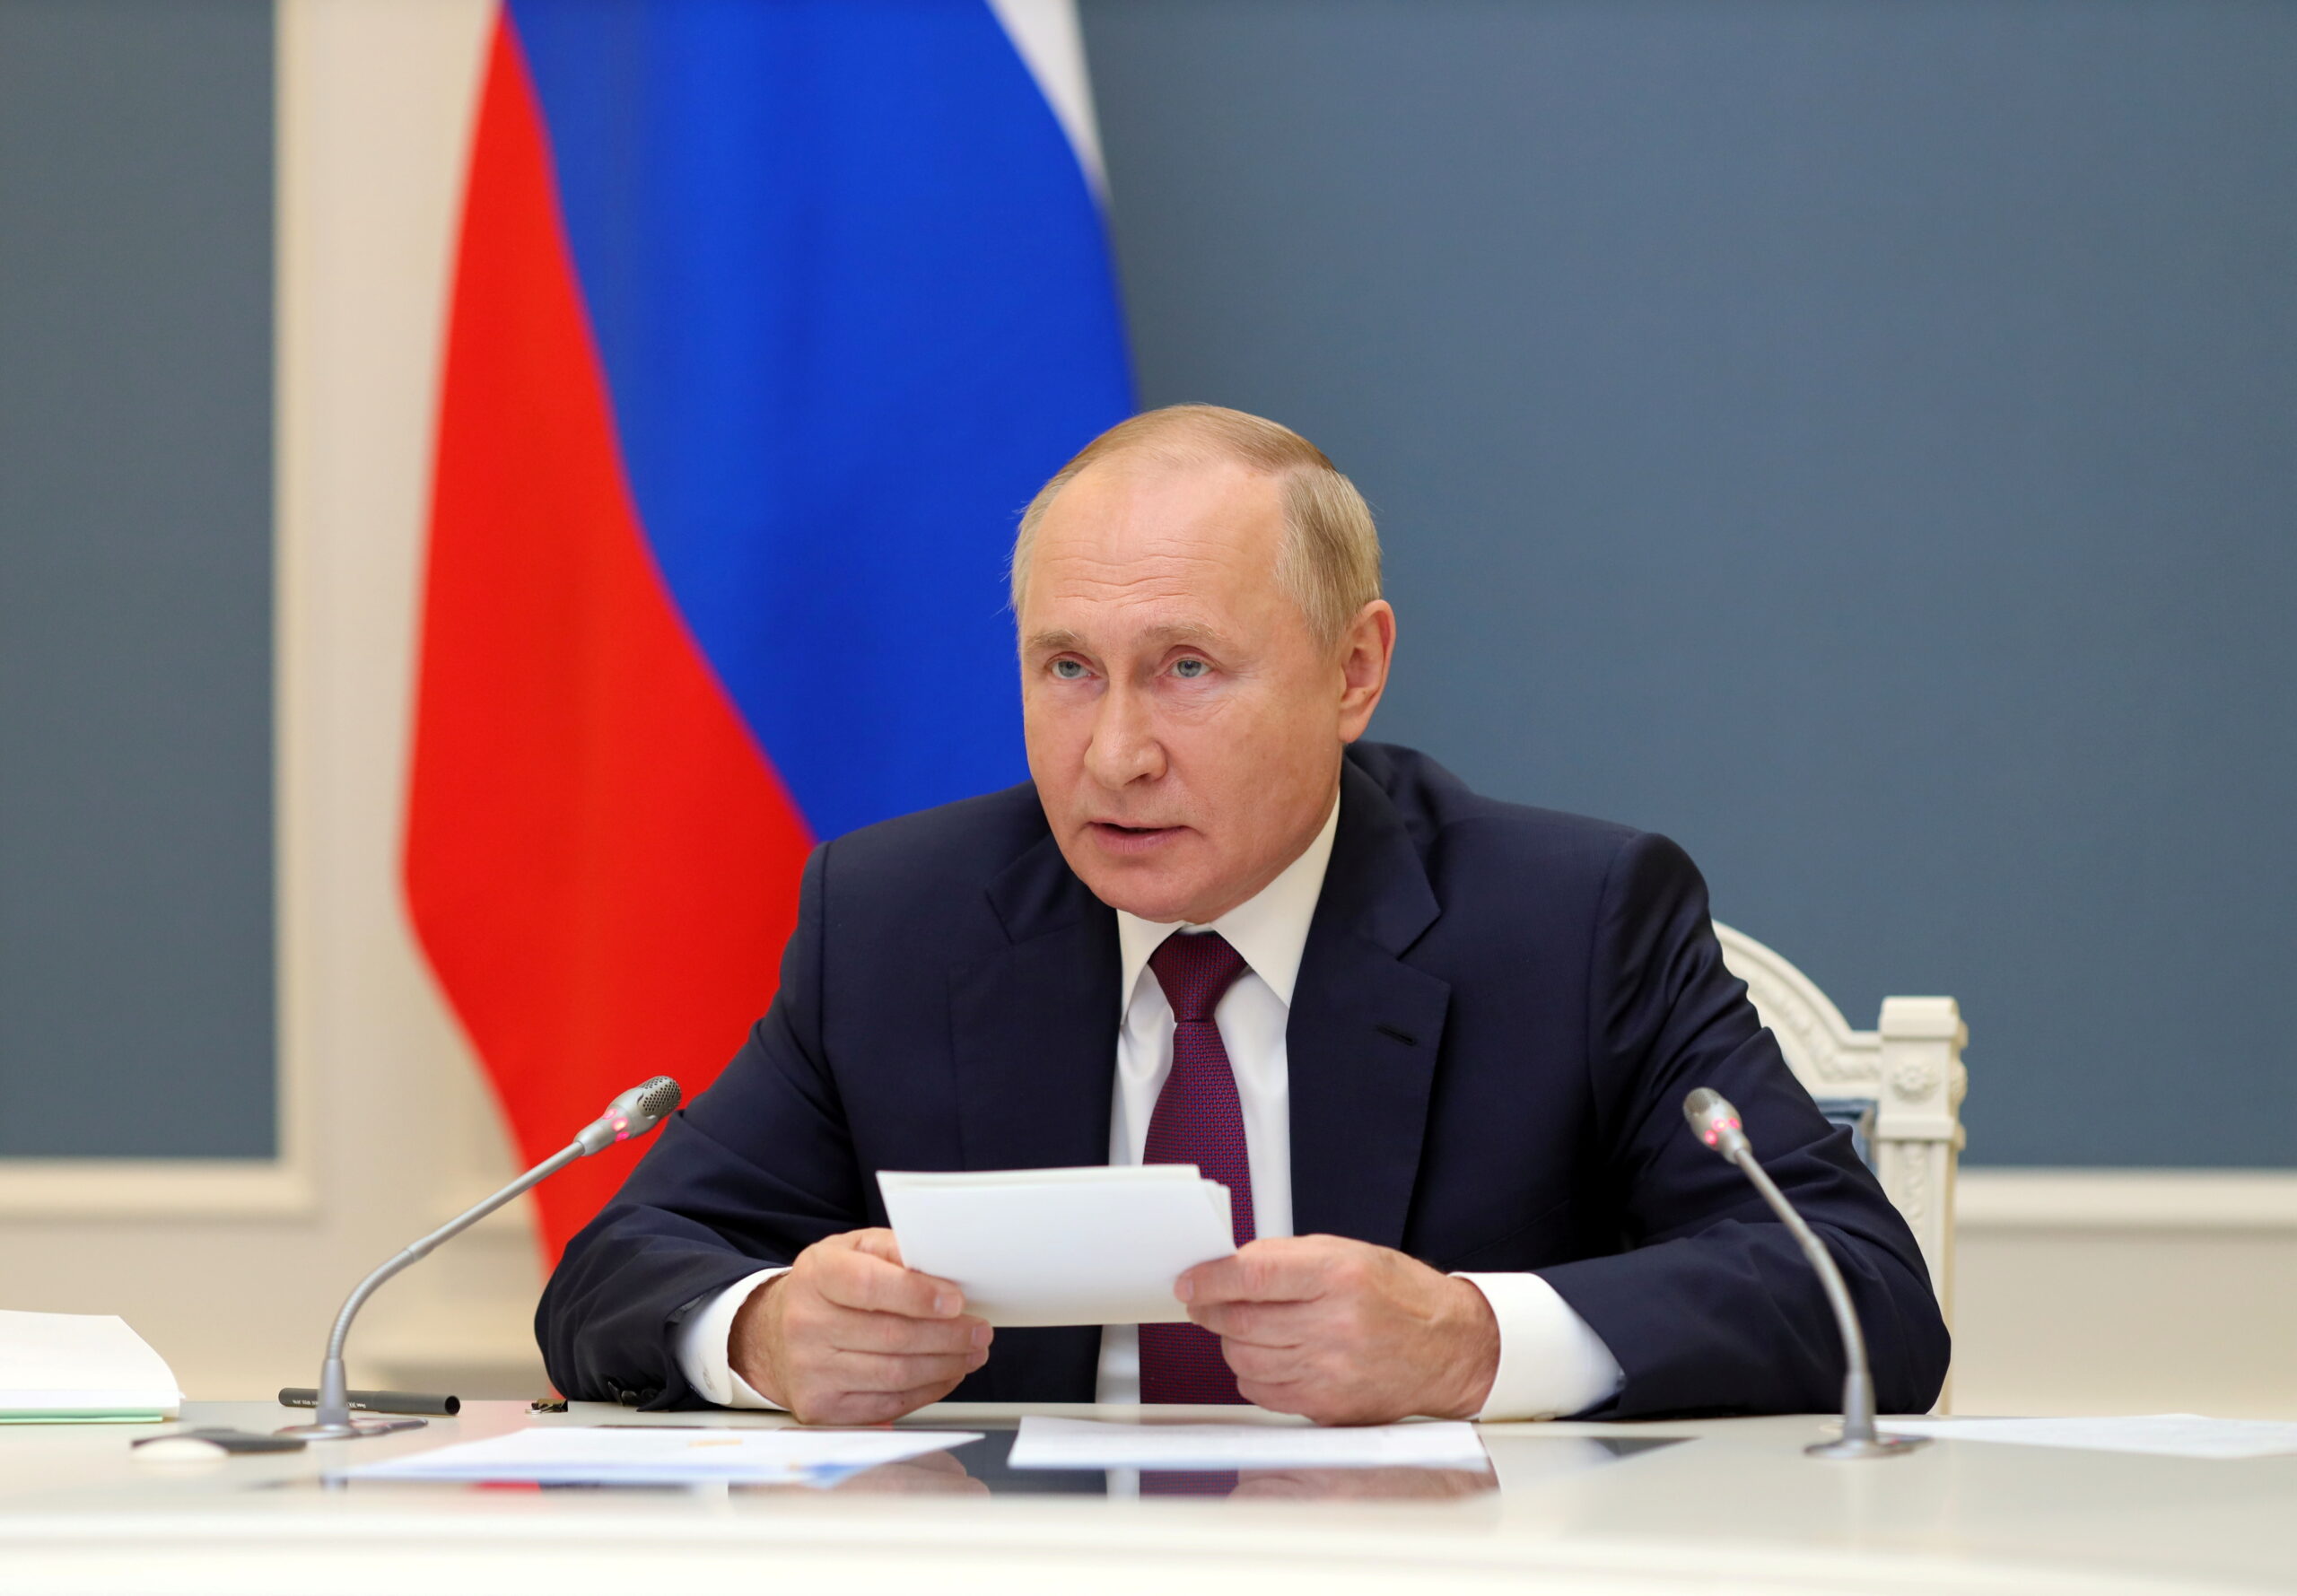 34_-Vladimir-Putins-Health-Raises-Concerns-Amid-Heart-Attack-Reports-2-scaled